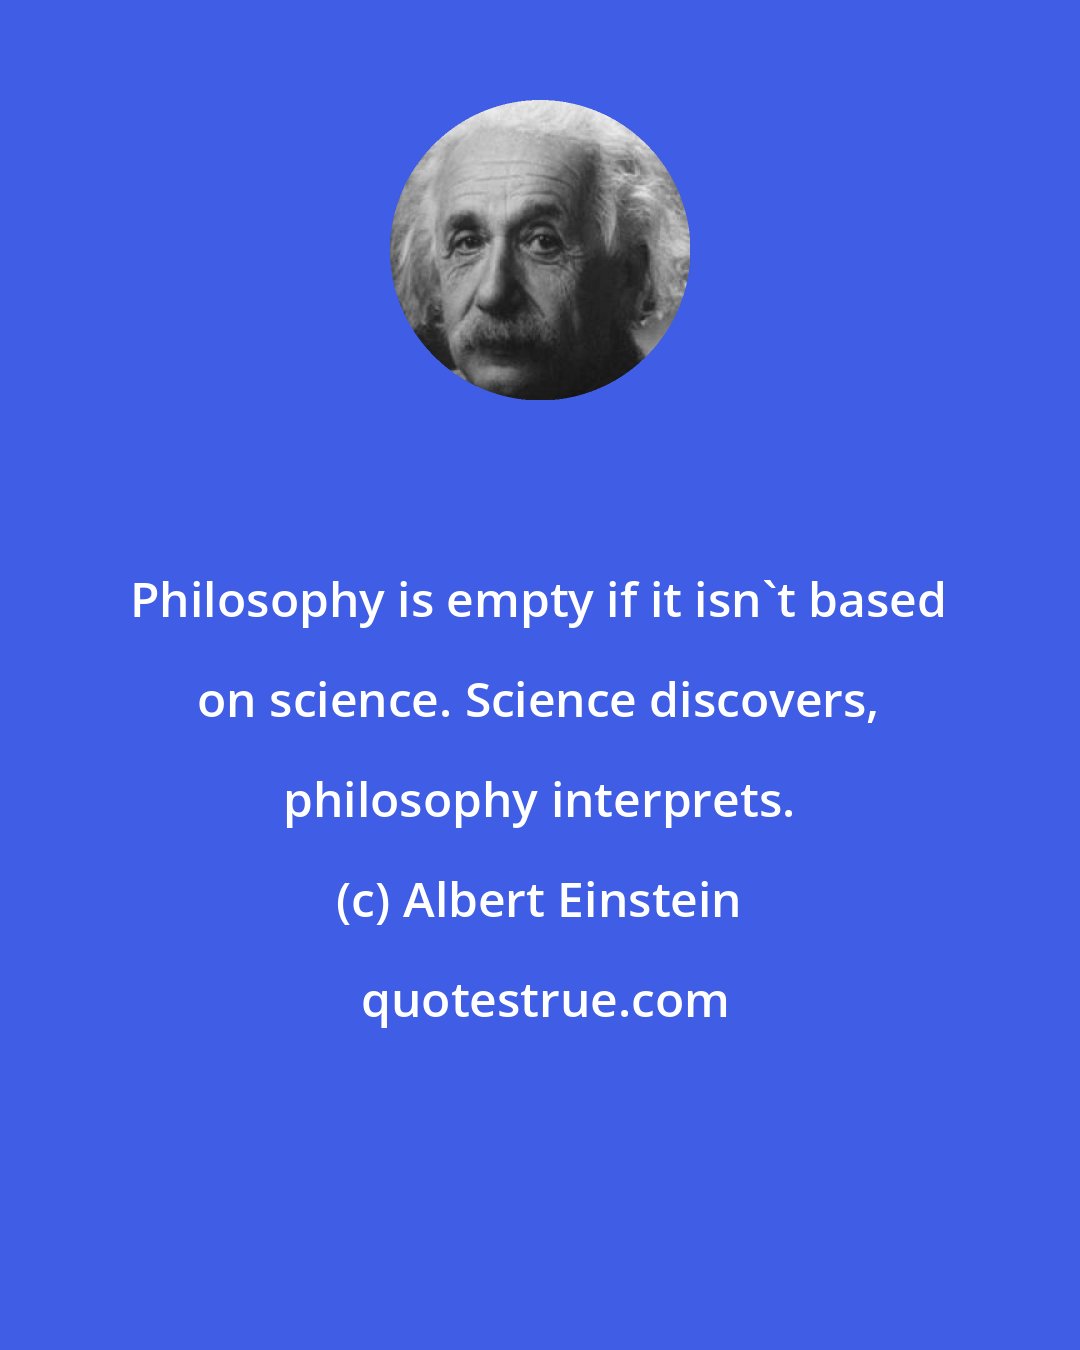 Albert Einstein: Philosophy is empty if it isn't based on science. Science discovers, philosophy interprets.